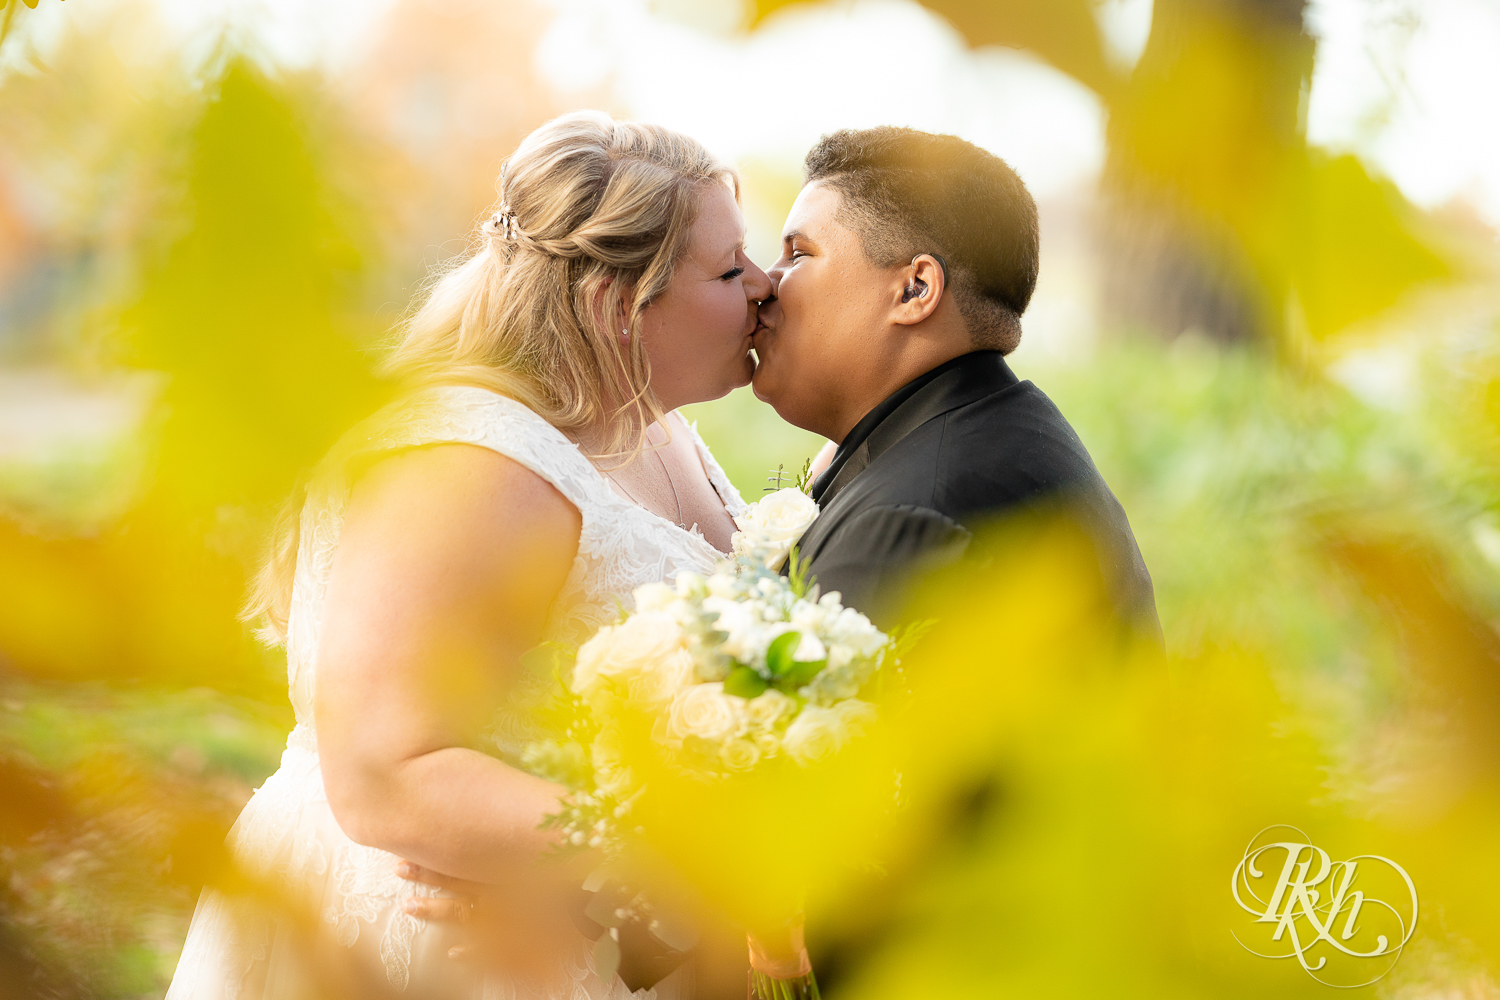 Eagan Community Center wedding brides kissing in leaves